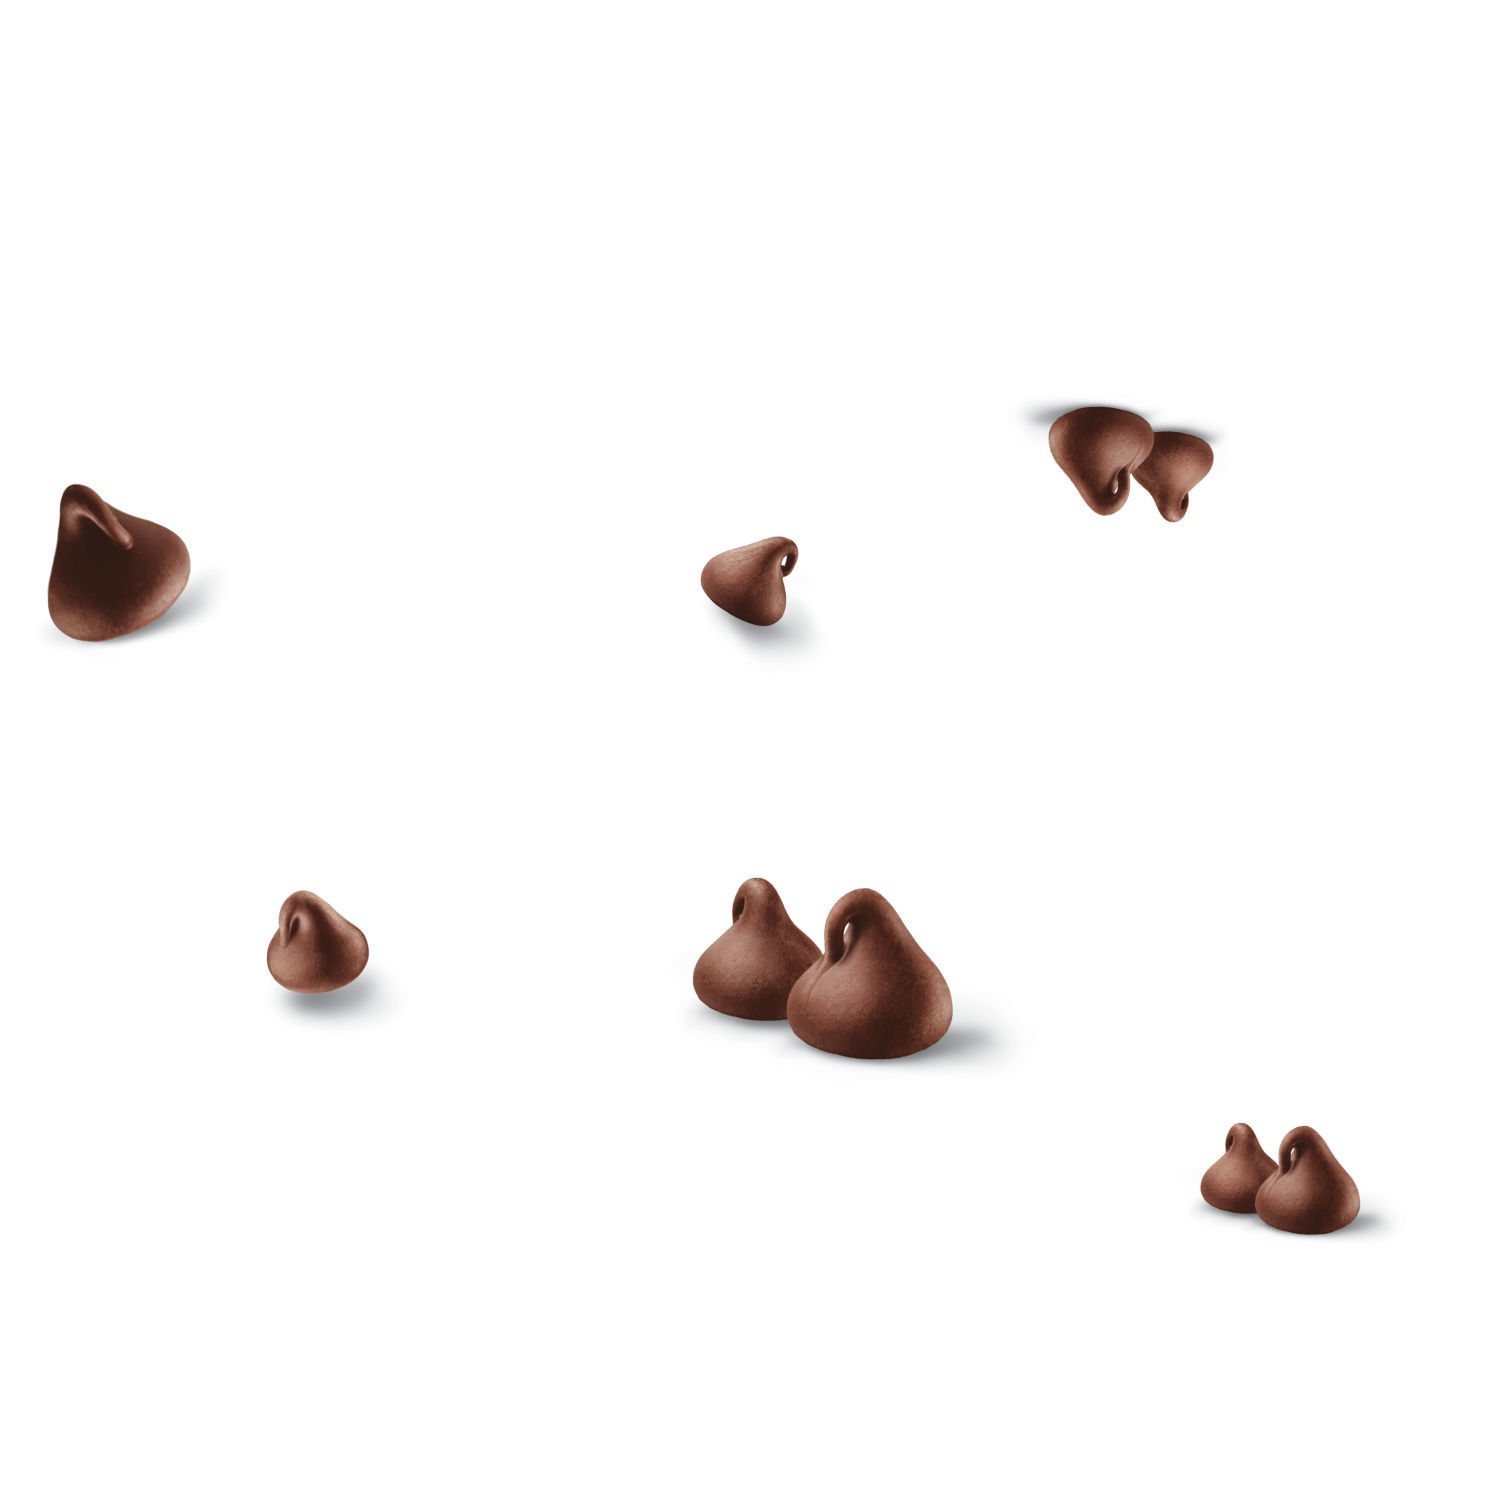 Hershey's Milk Chocolate Baking Chips, Bag 11.5 oz - image 4 of 9